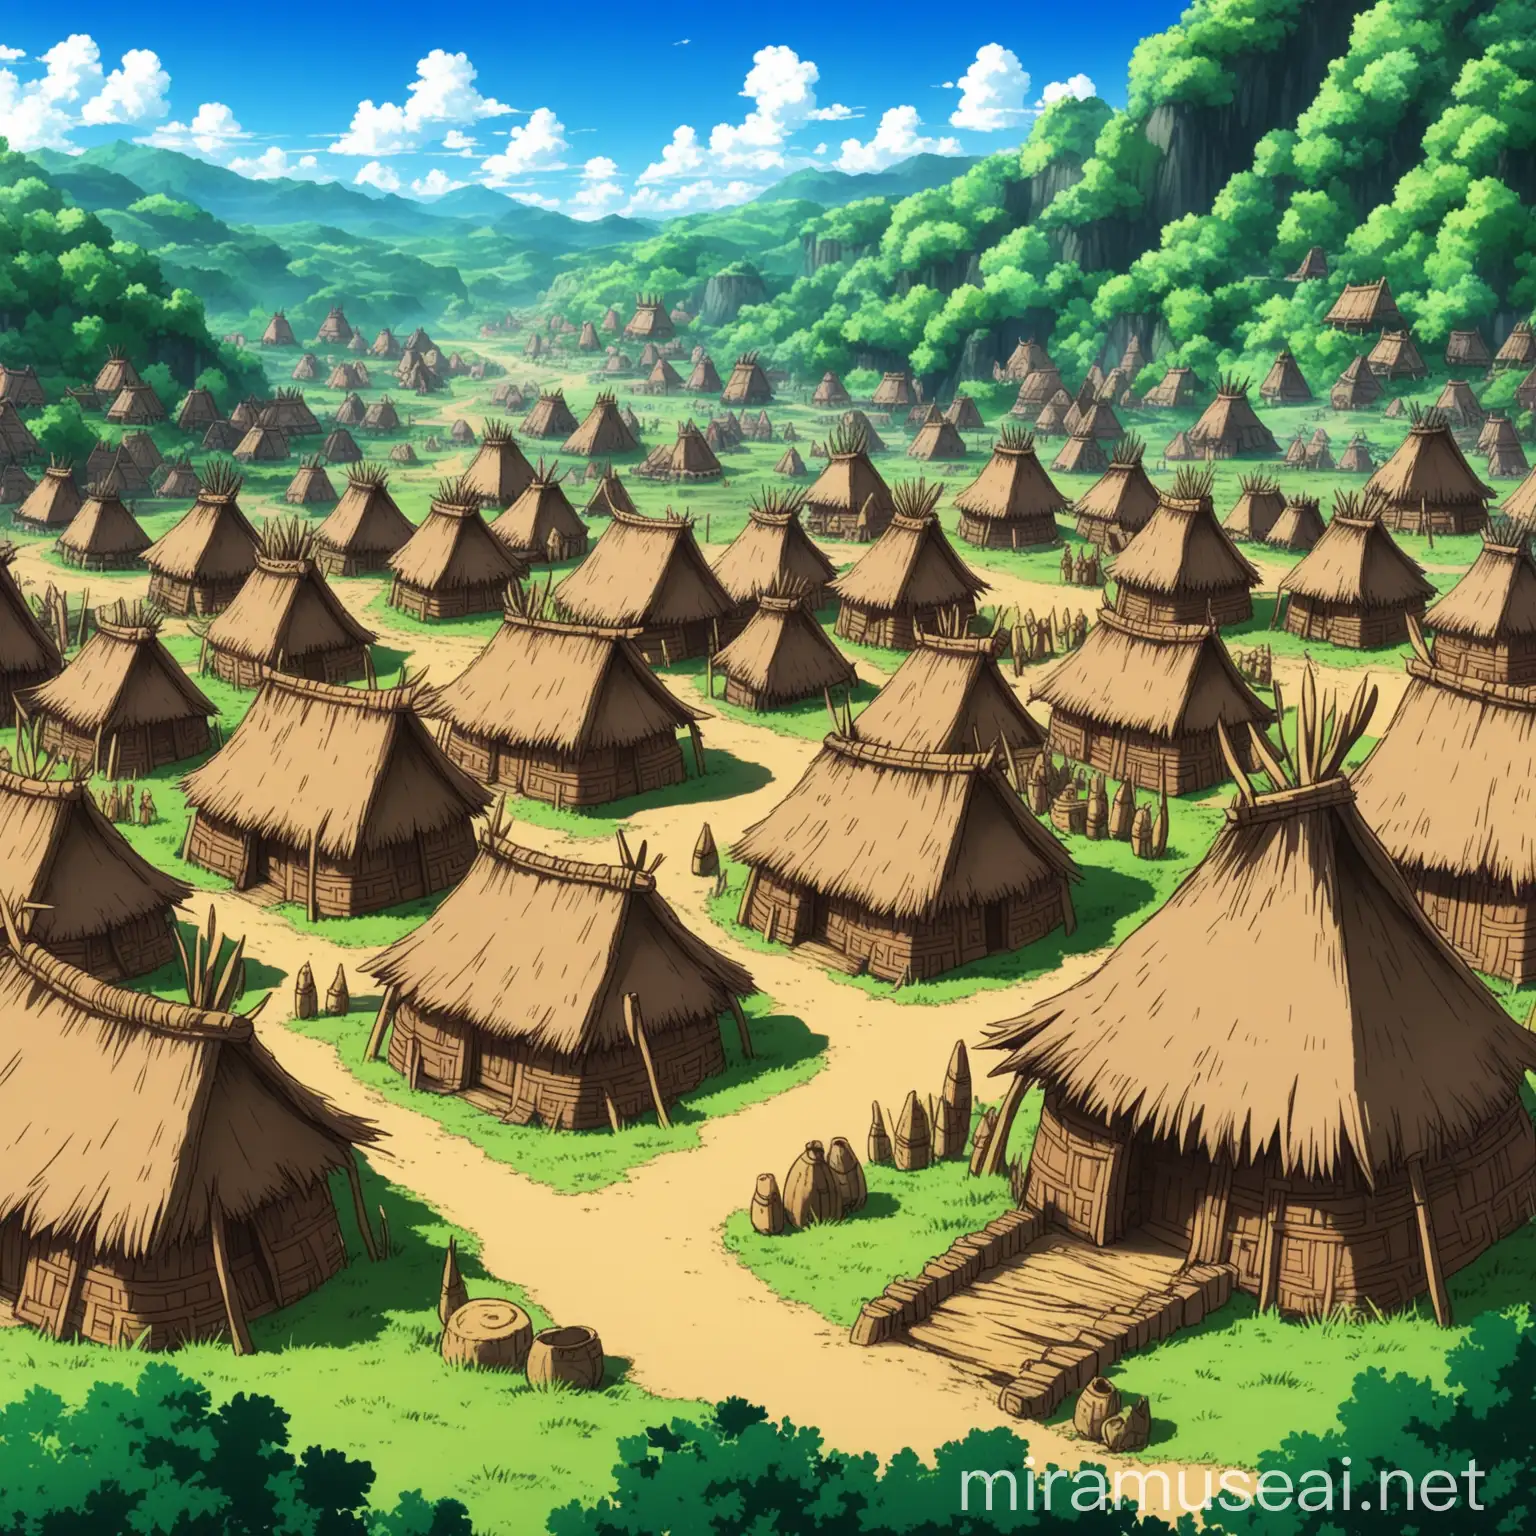 Enchanting Anime Fantasy Village Vibrant Tribal Setting